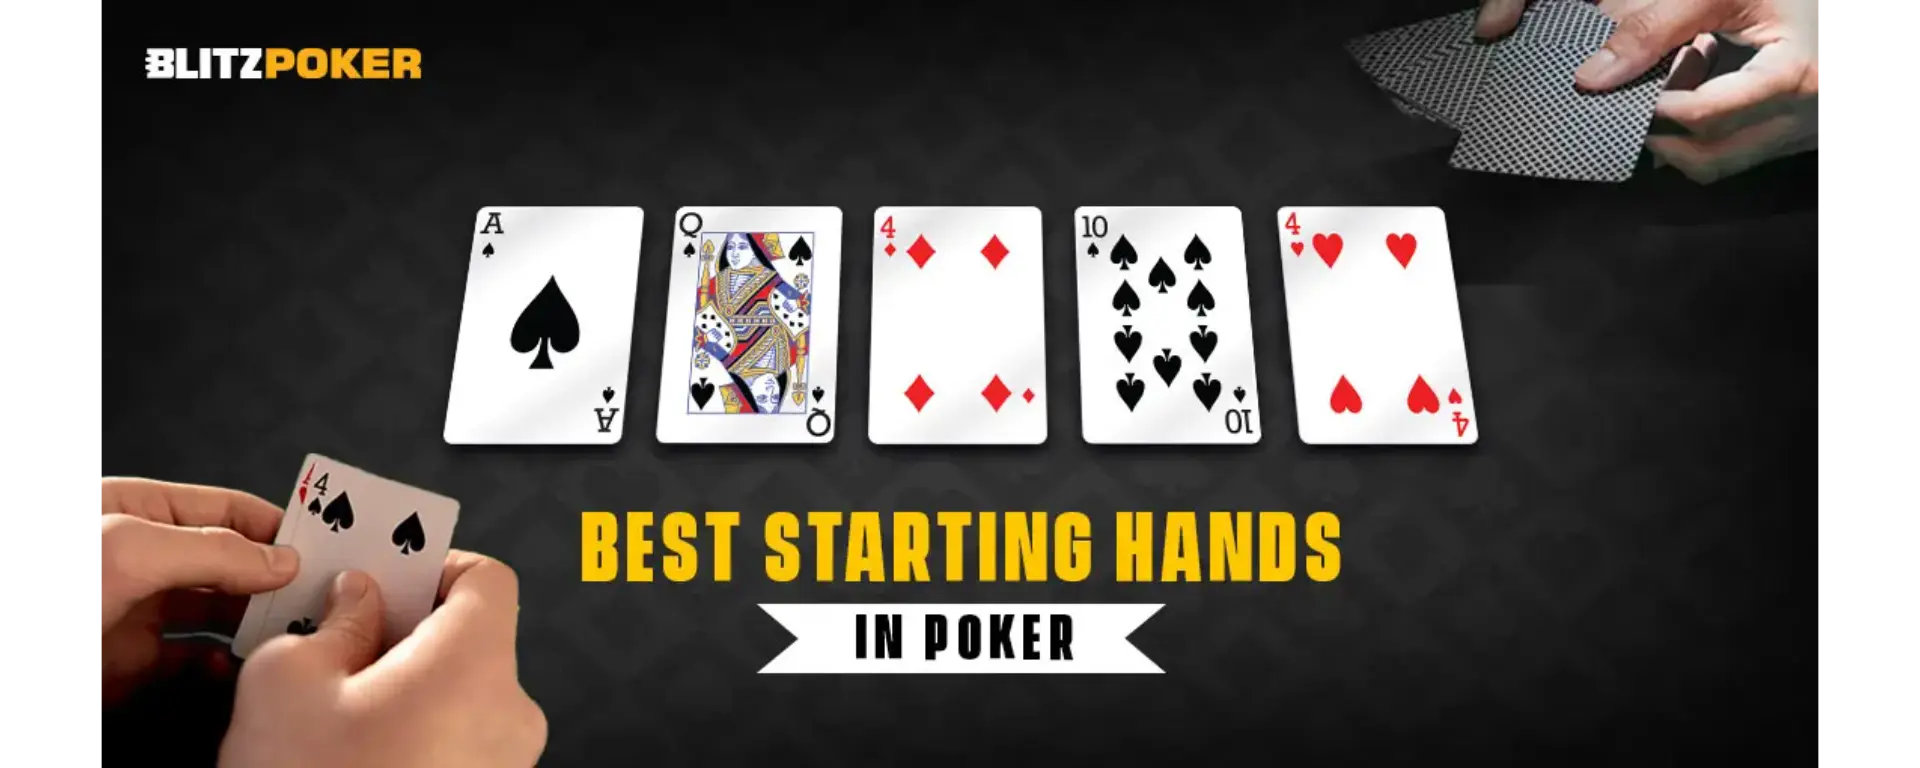 Best Starting Hands in Poker